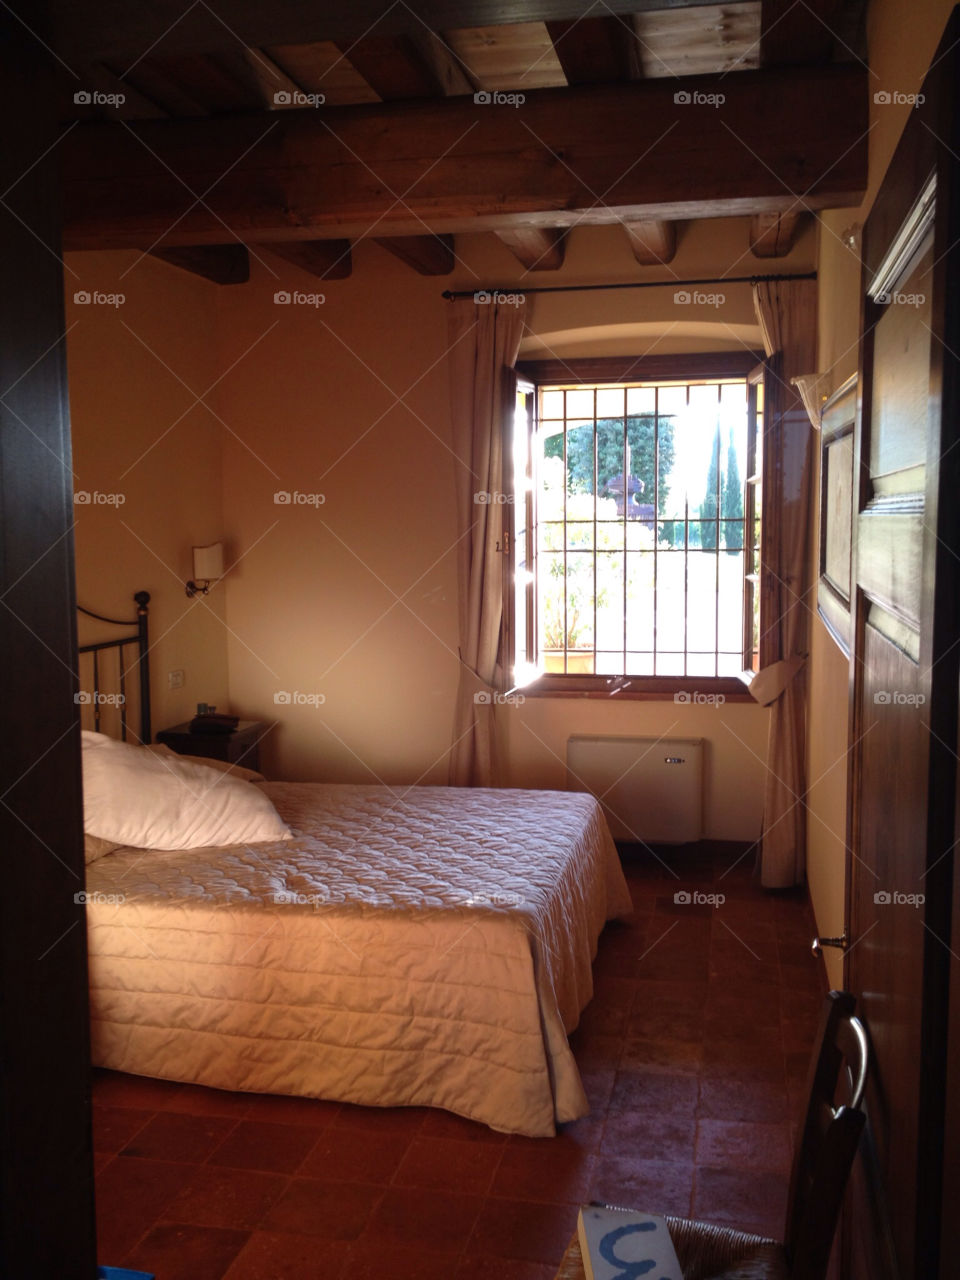 italy sleeping romantic bedroom by zulutwelve